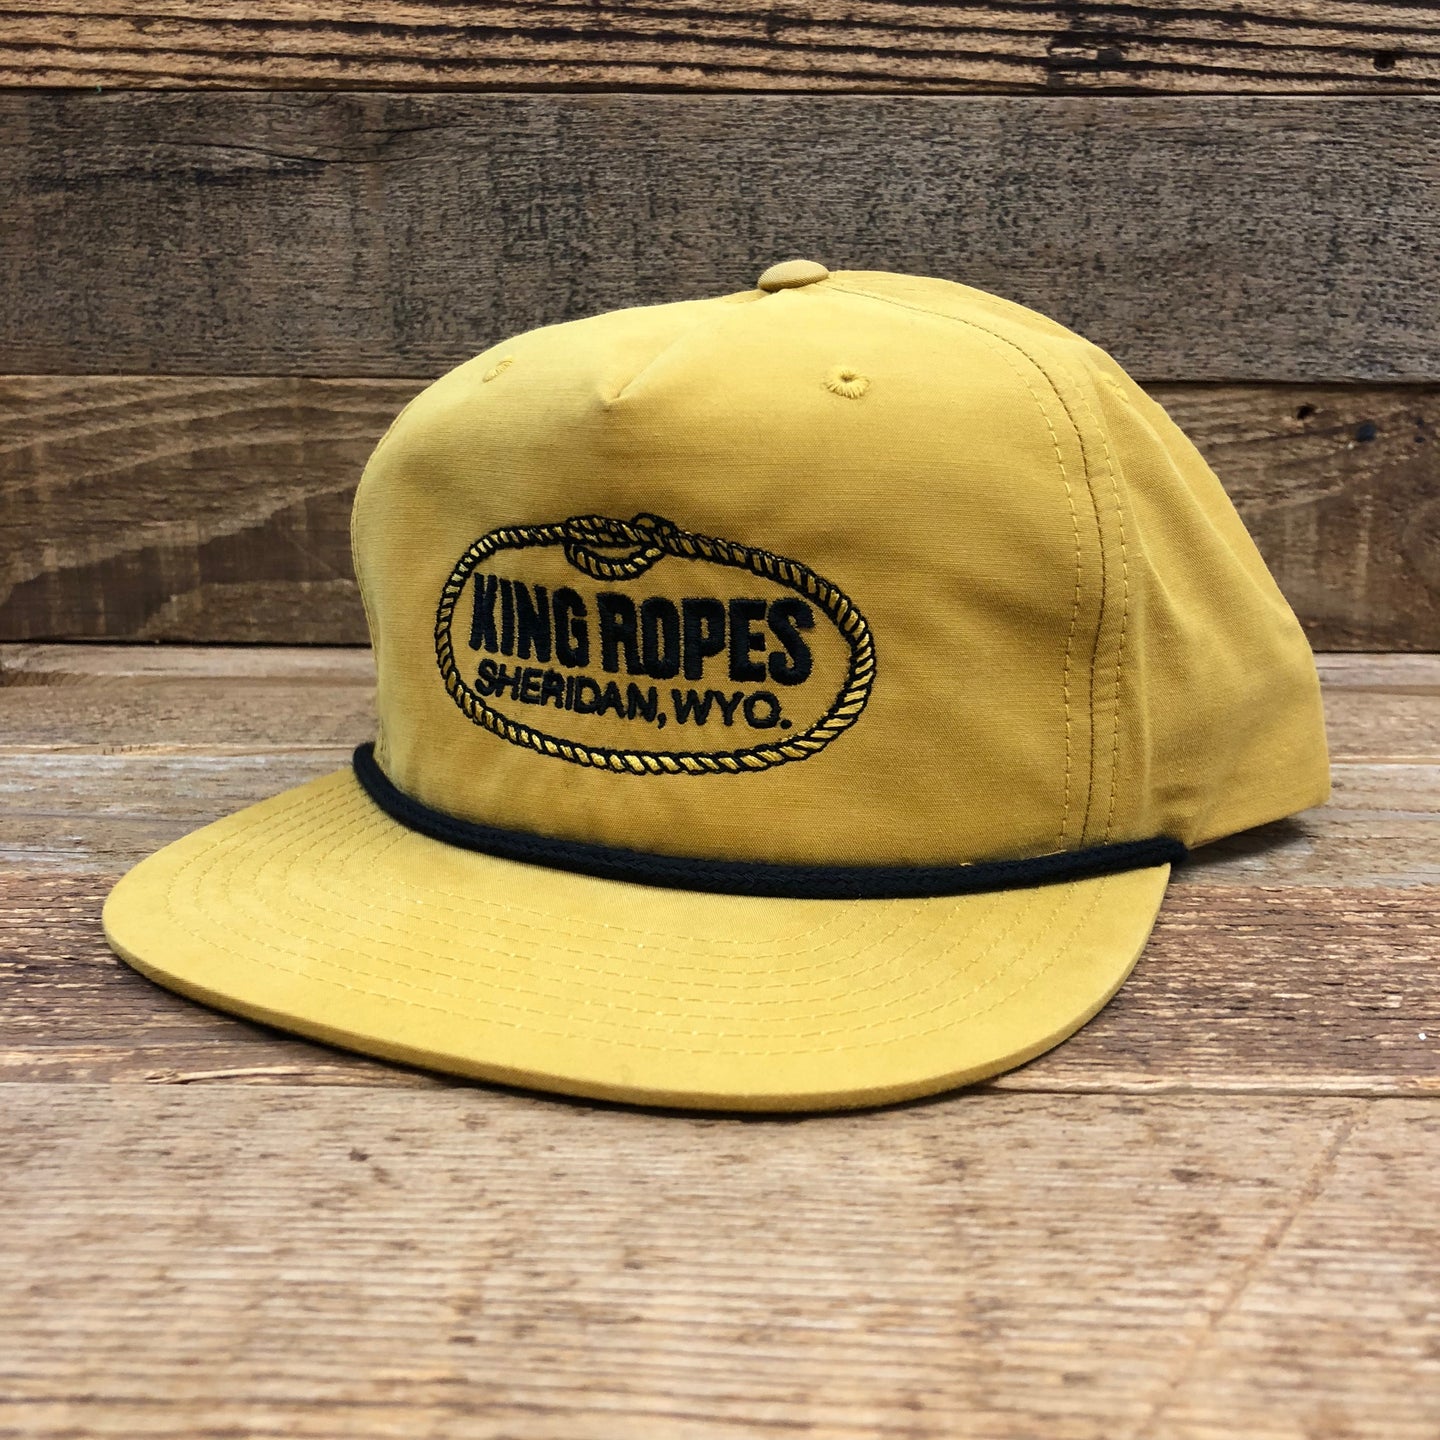 King Ropes Original Gramps Hat - Biscuit